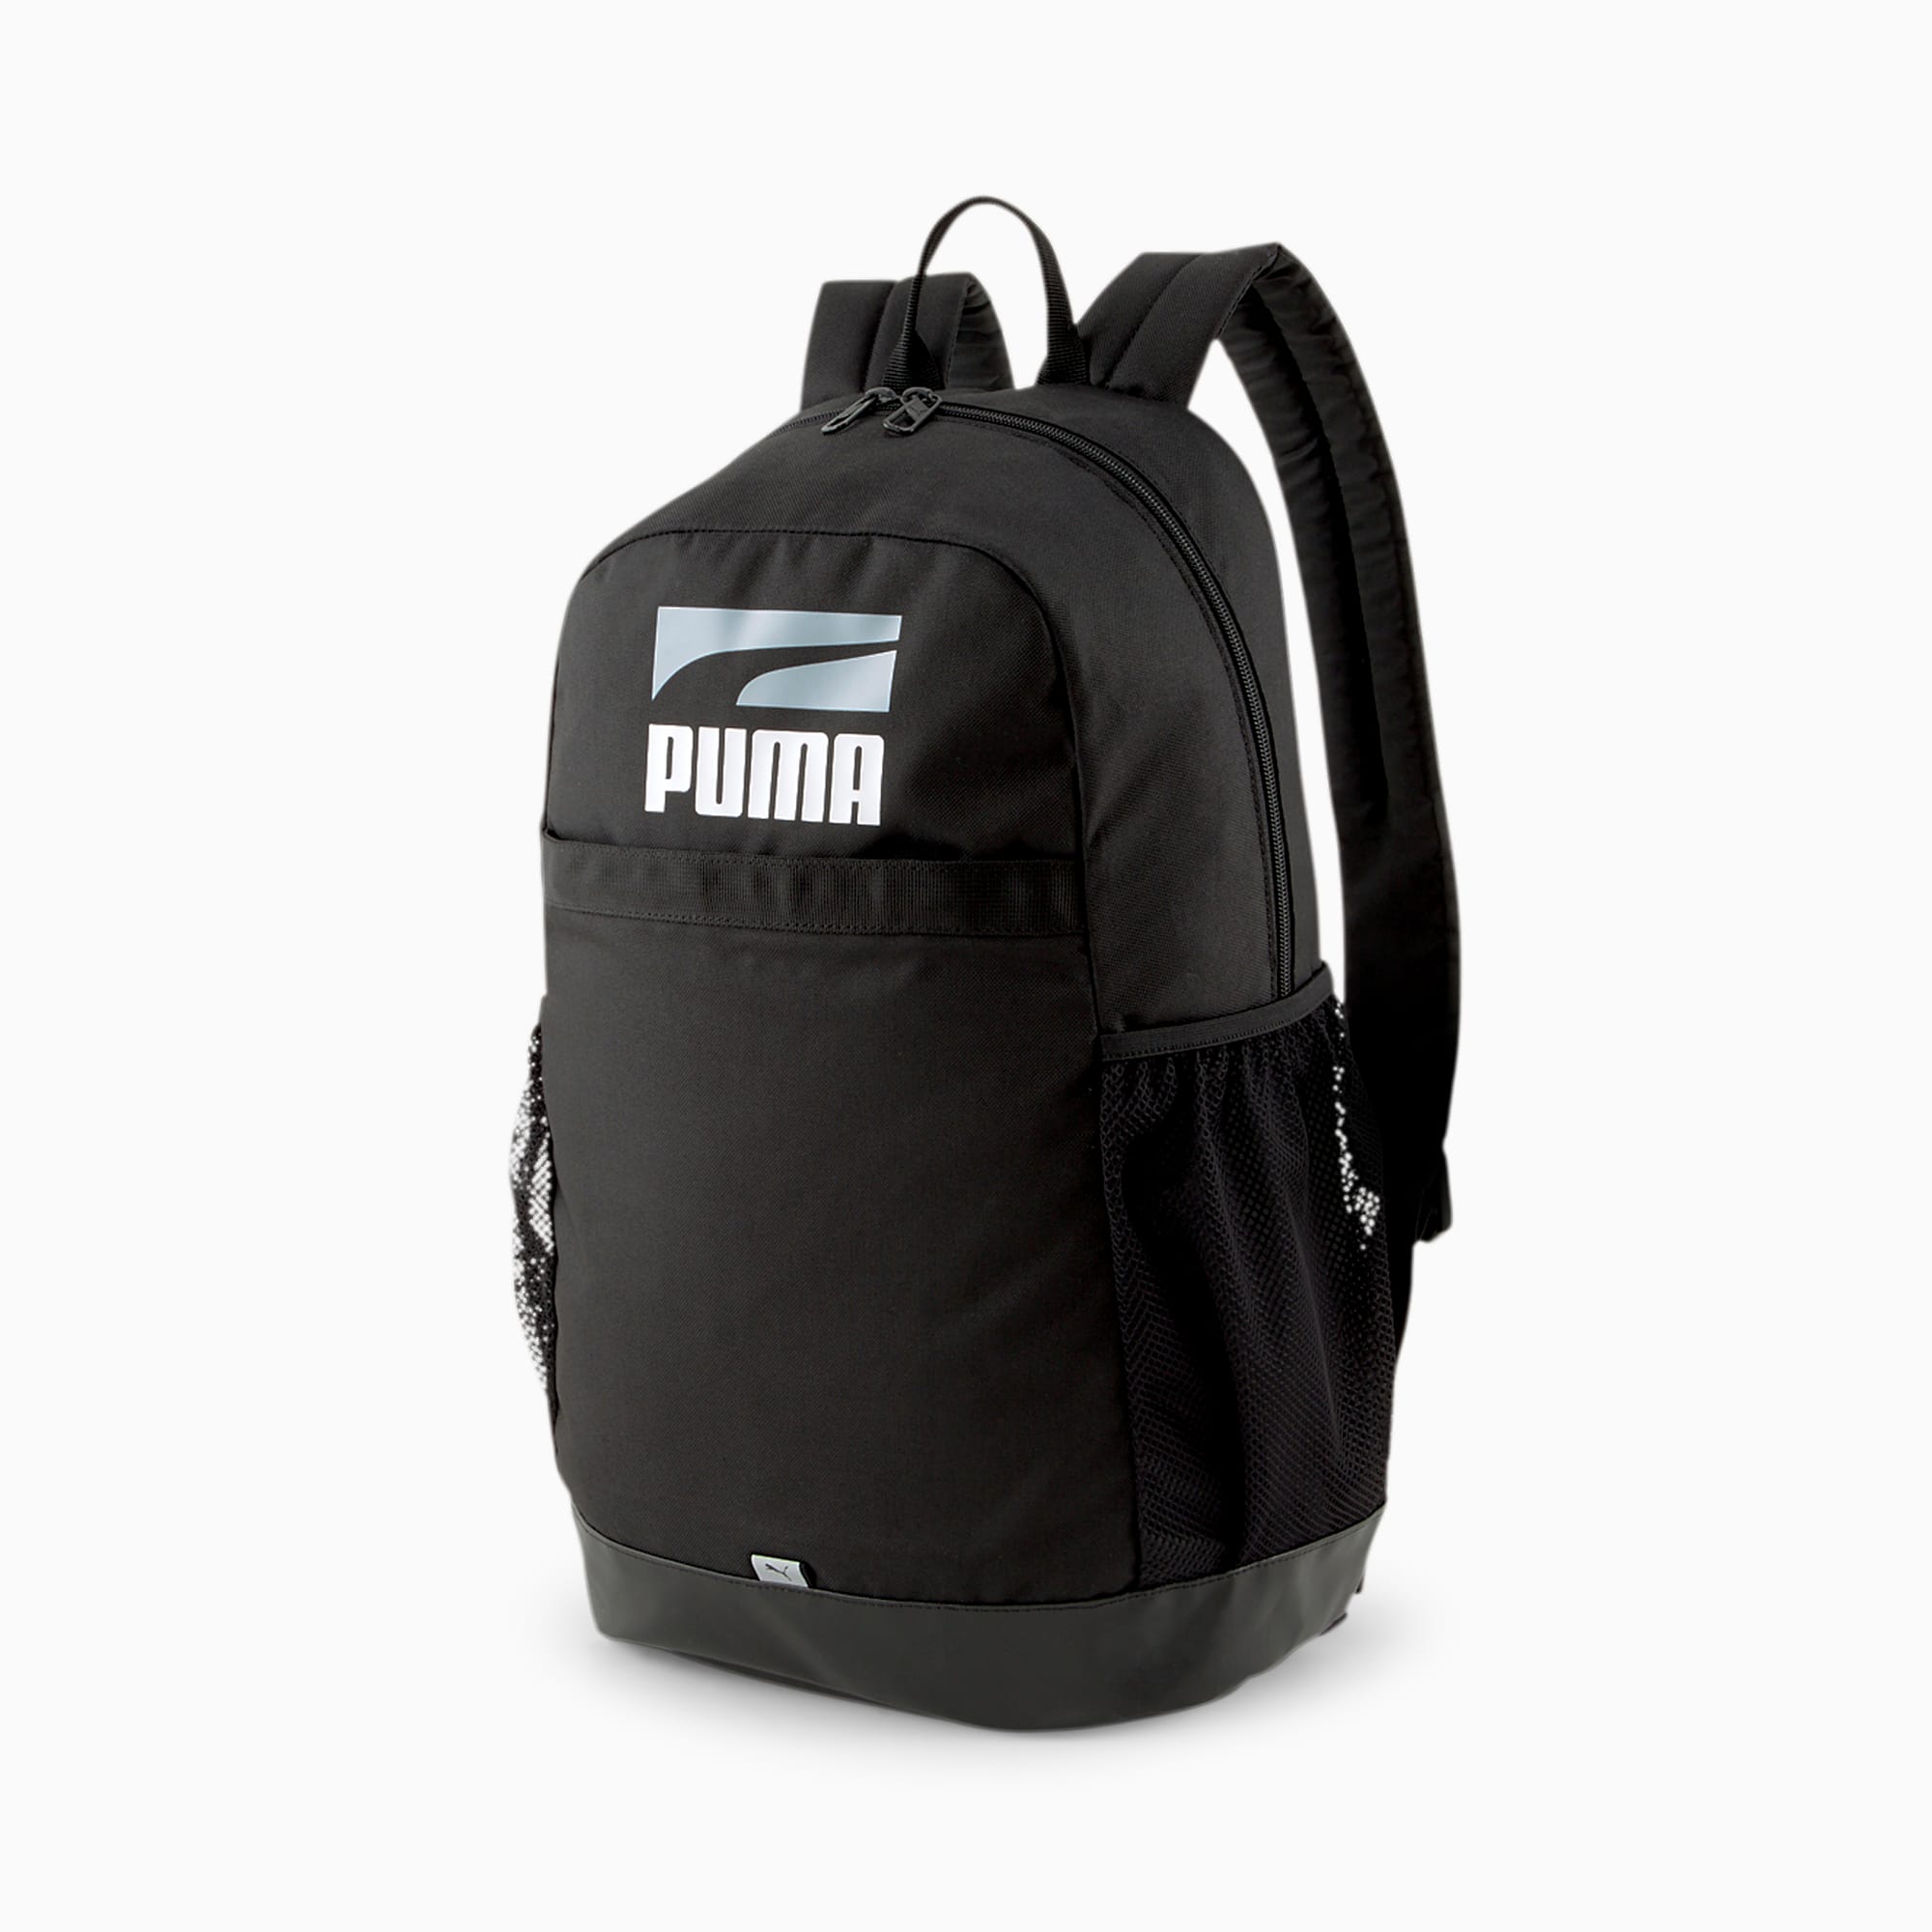 Plus II Backpack | PUMA | Rucksäcke